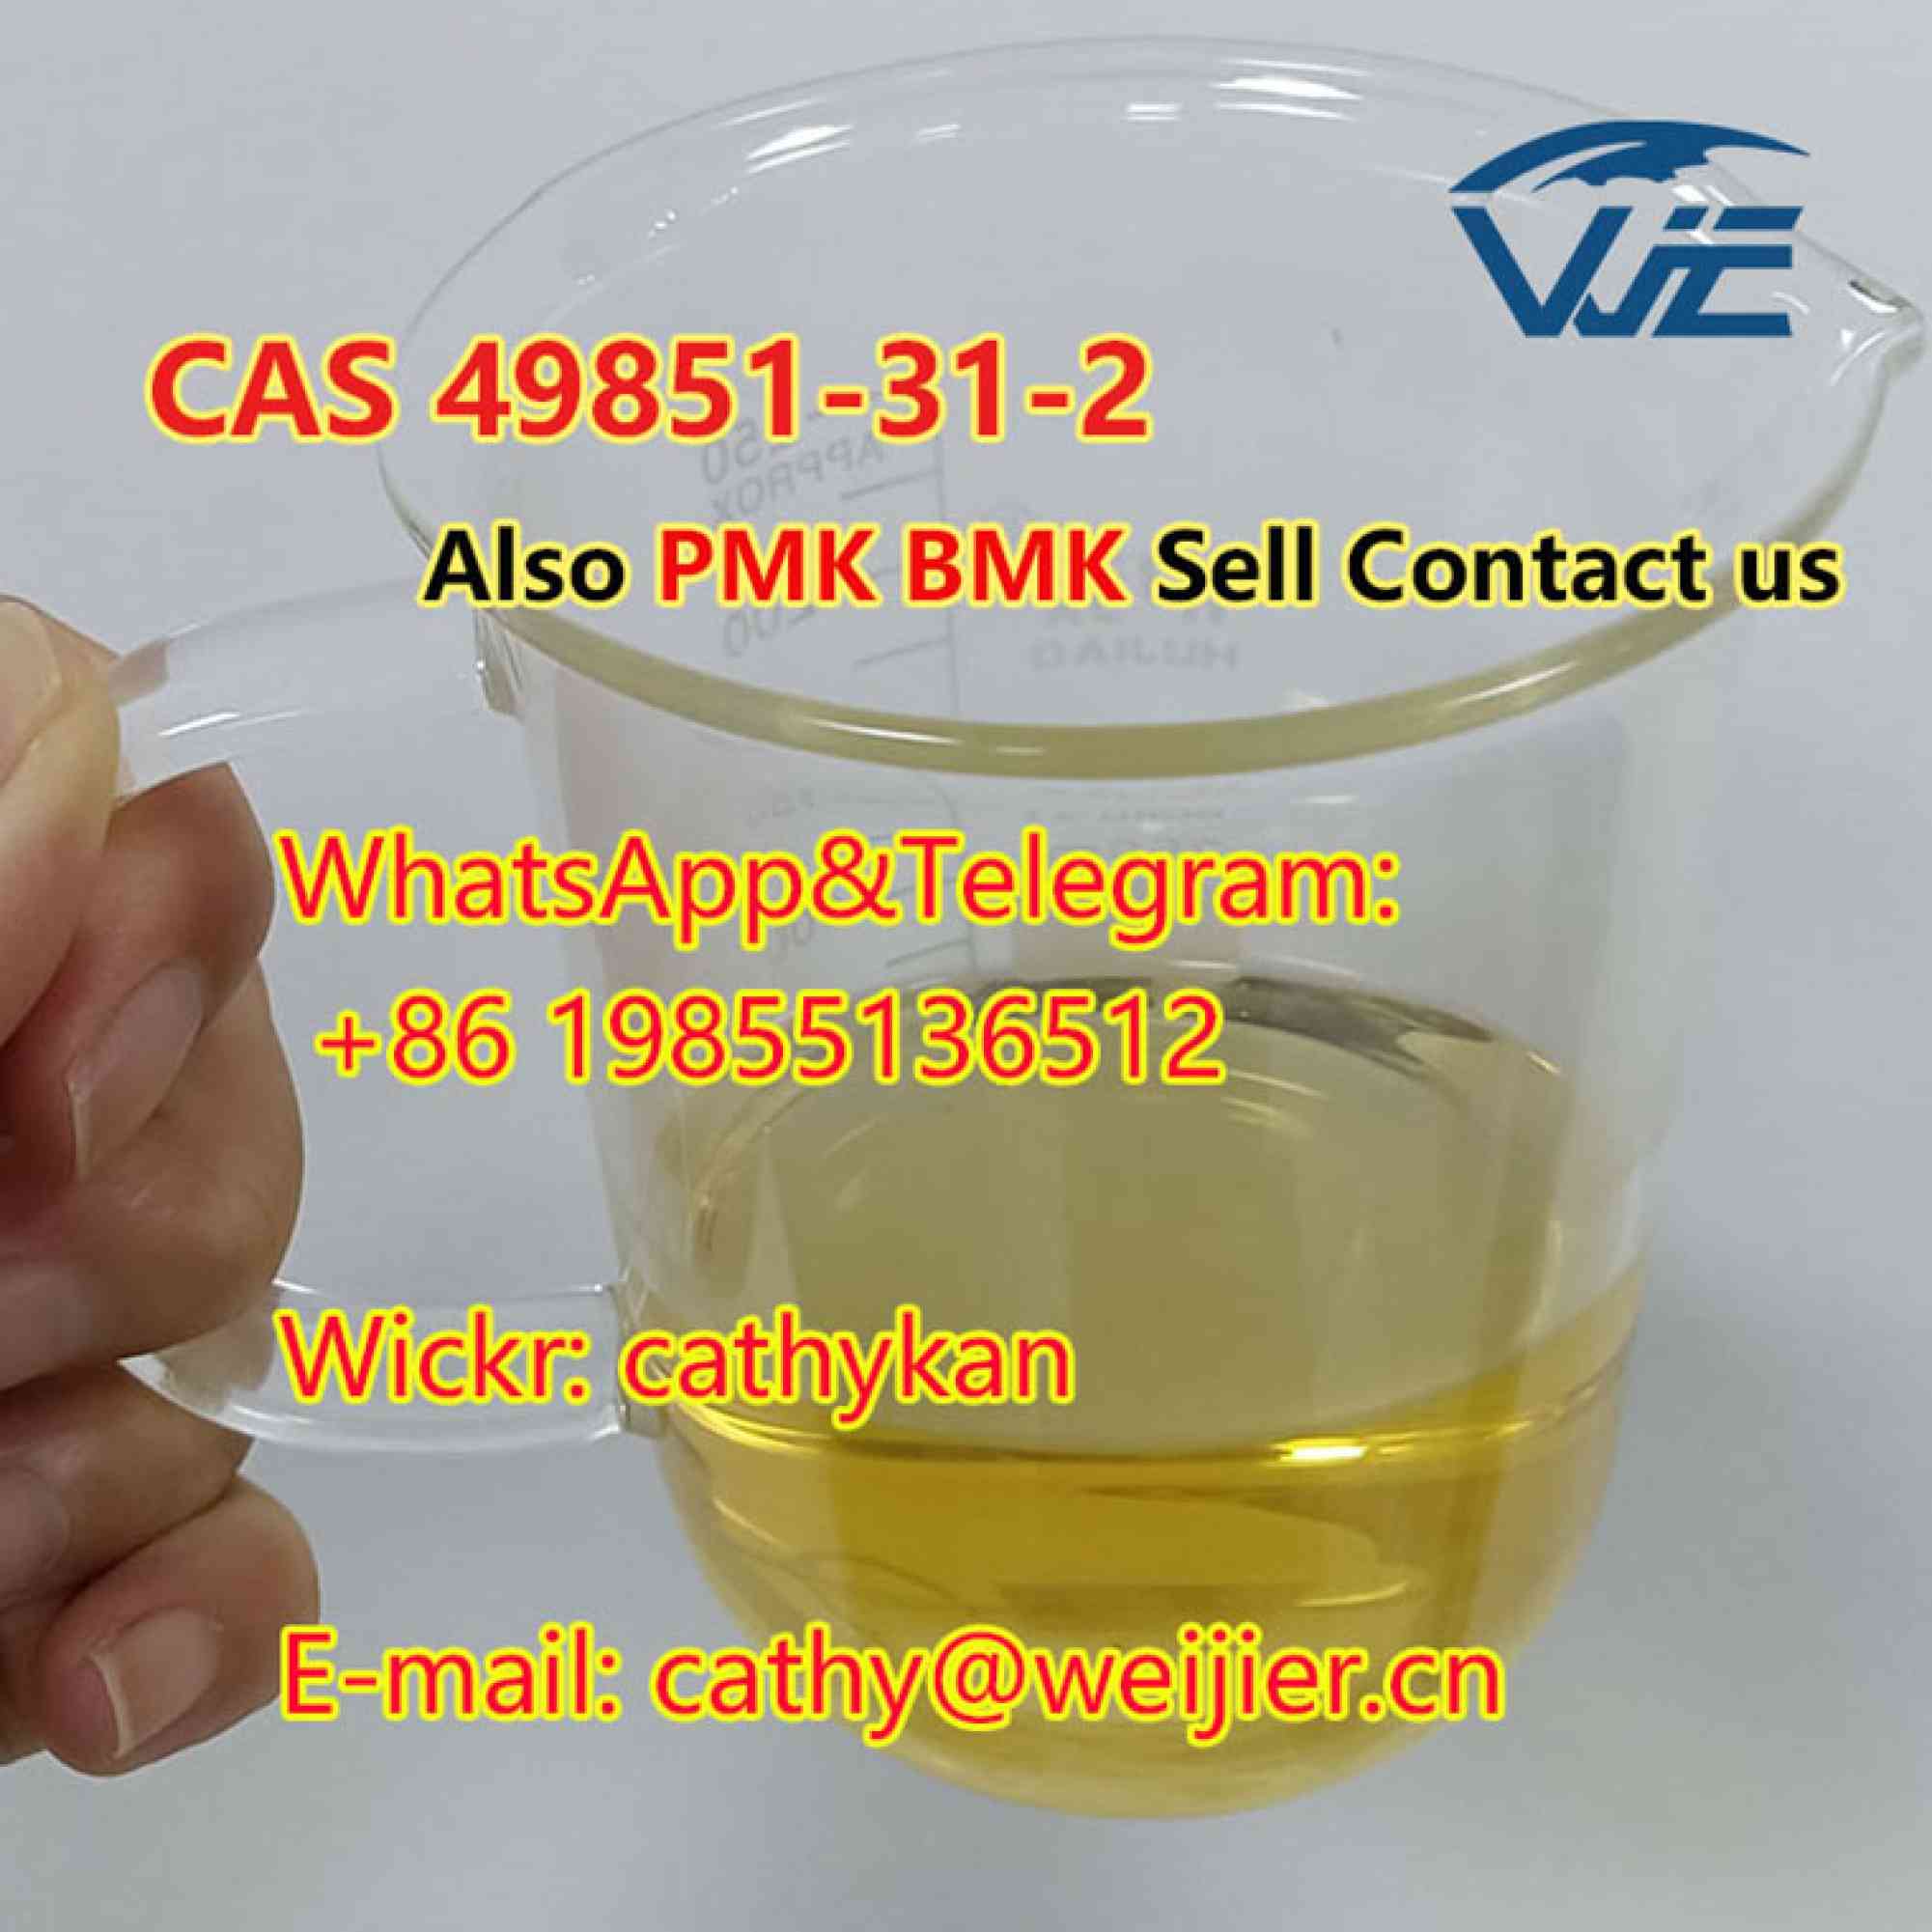 CAS 49851-31-2 High Quality BMK PMK Oil en venta